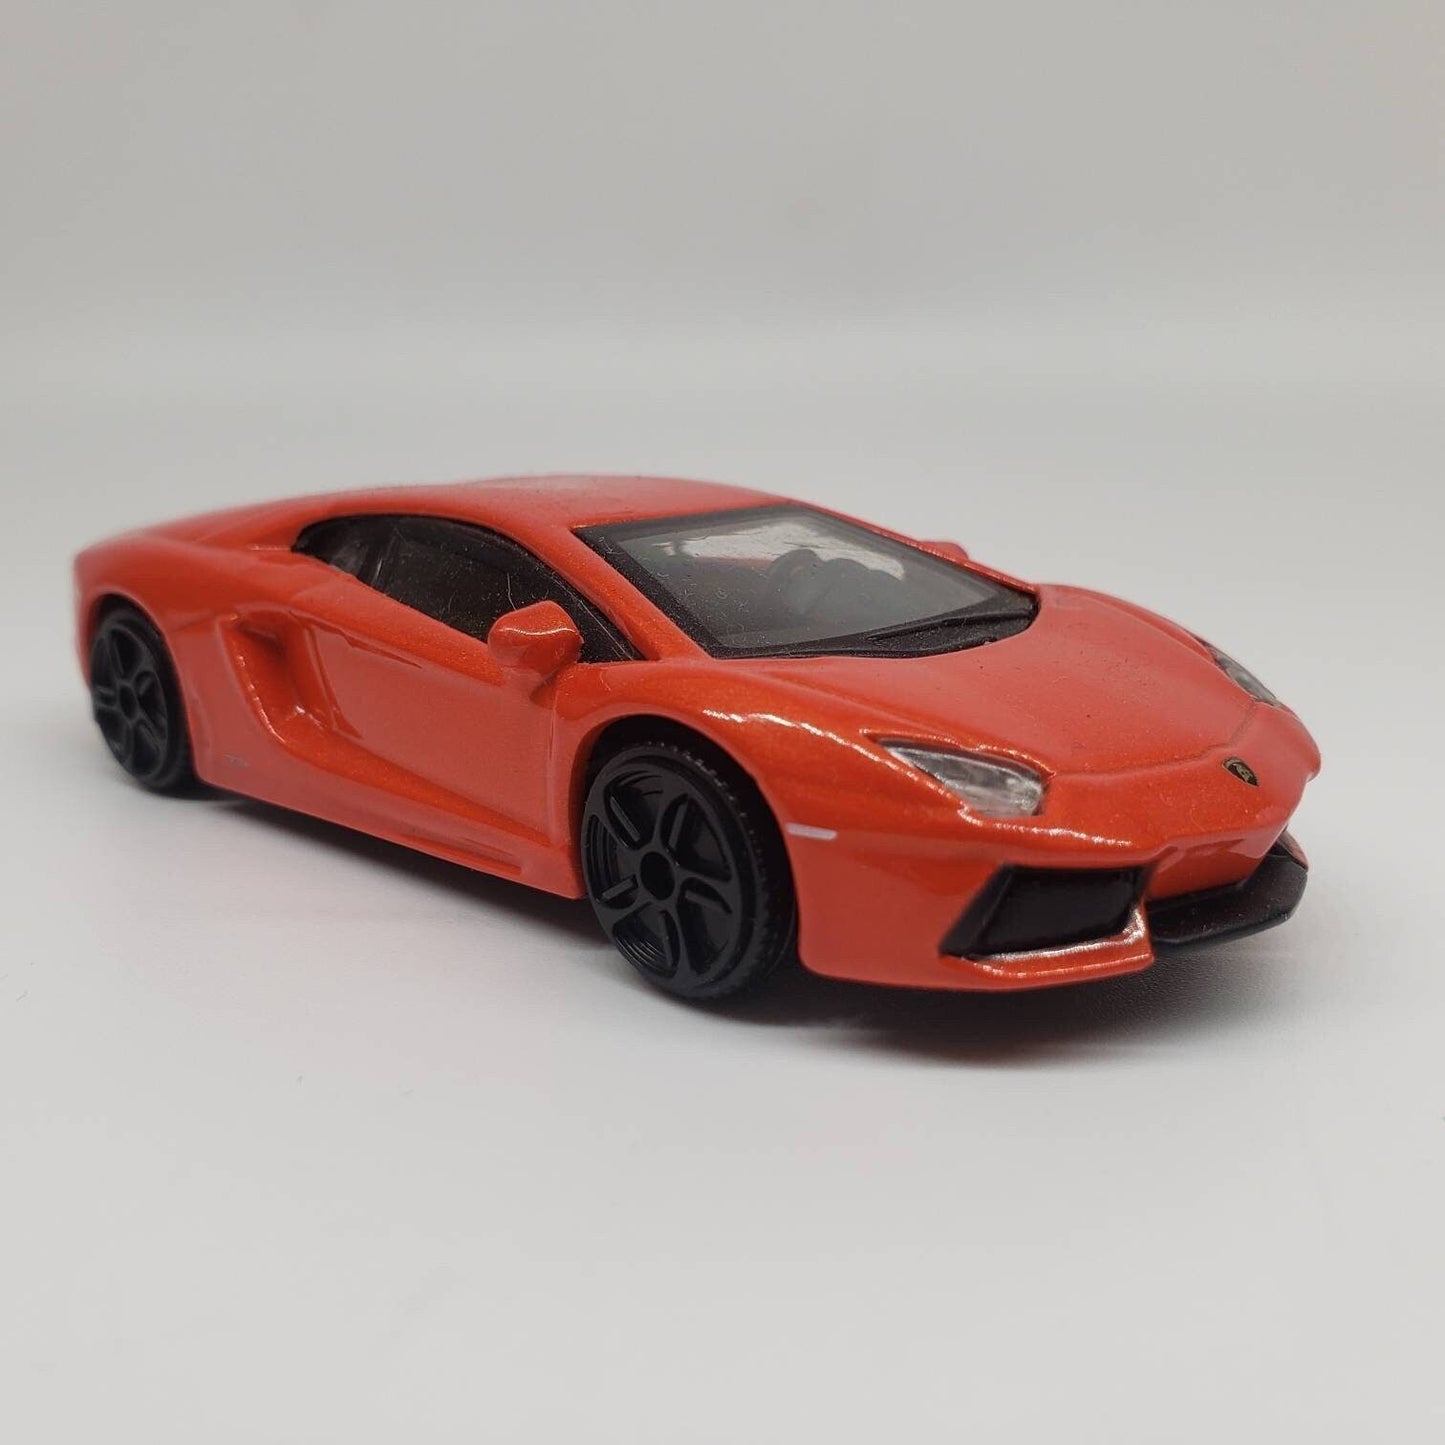 Bburago Lamborghini Aventador Orange Miniature Collectible 145 Scale Model Toy Car